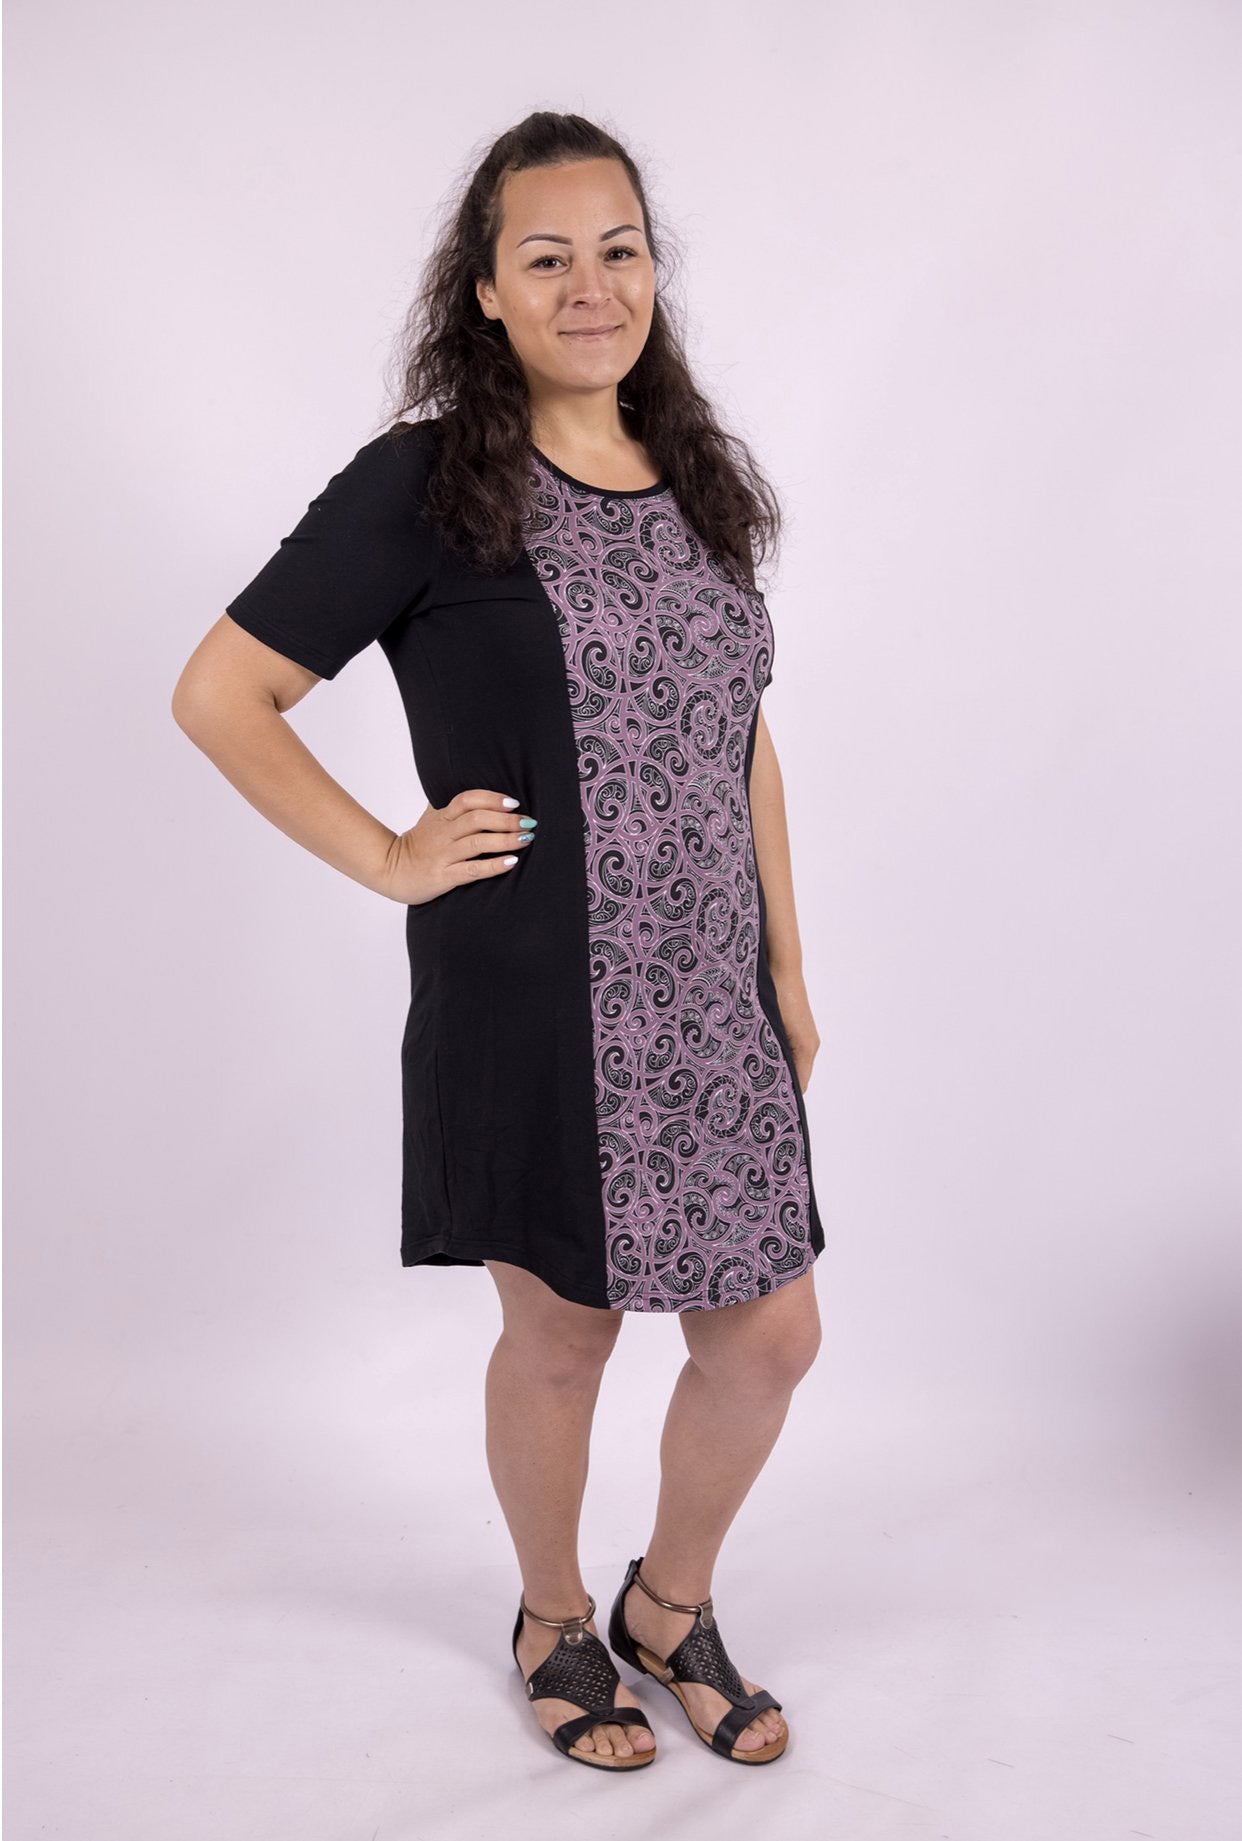 nz clothing maori design clothing short sleeve t-shirt dress by Emere Designs